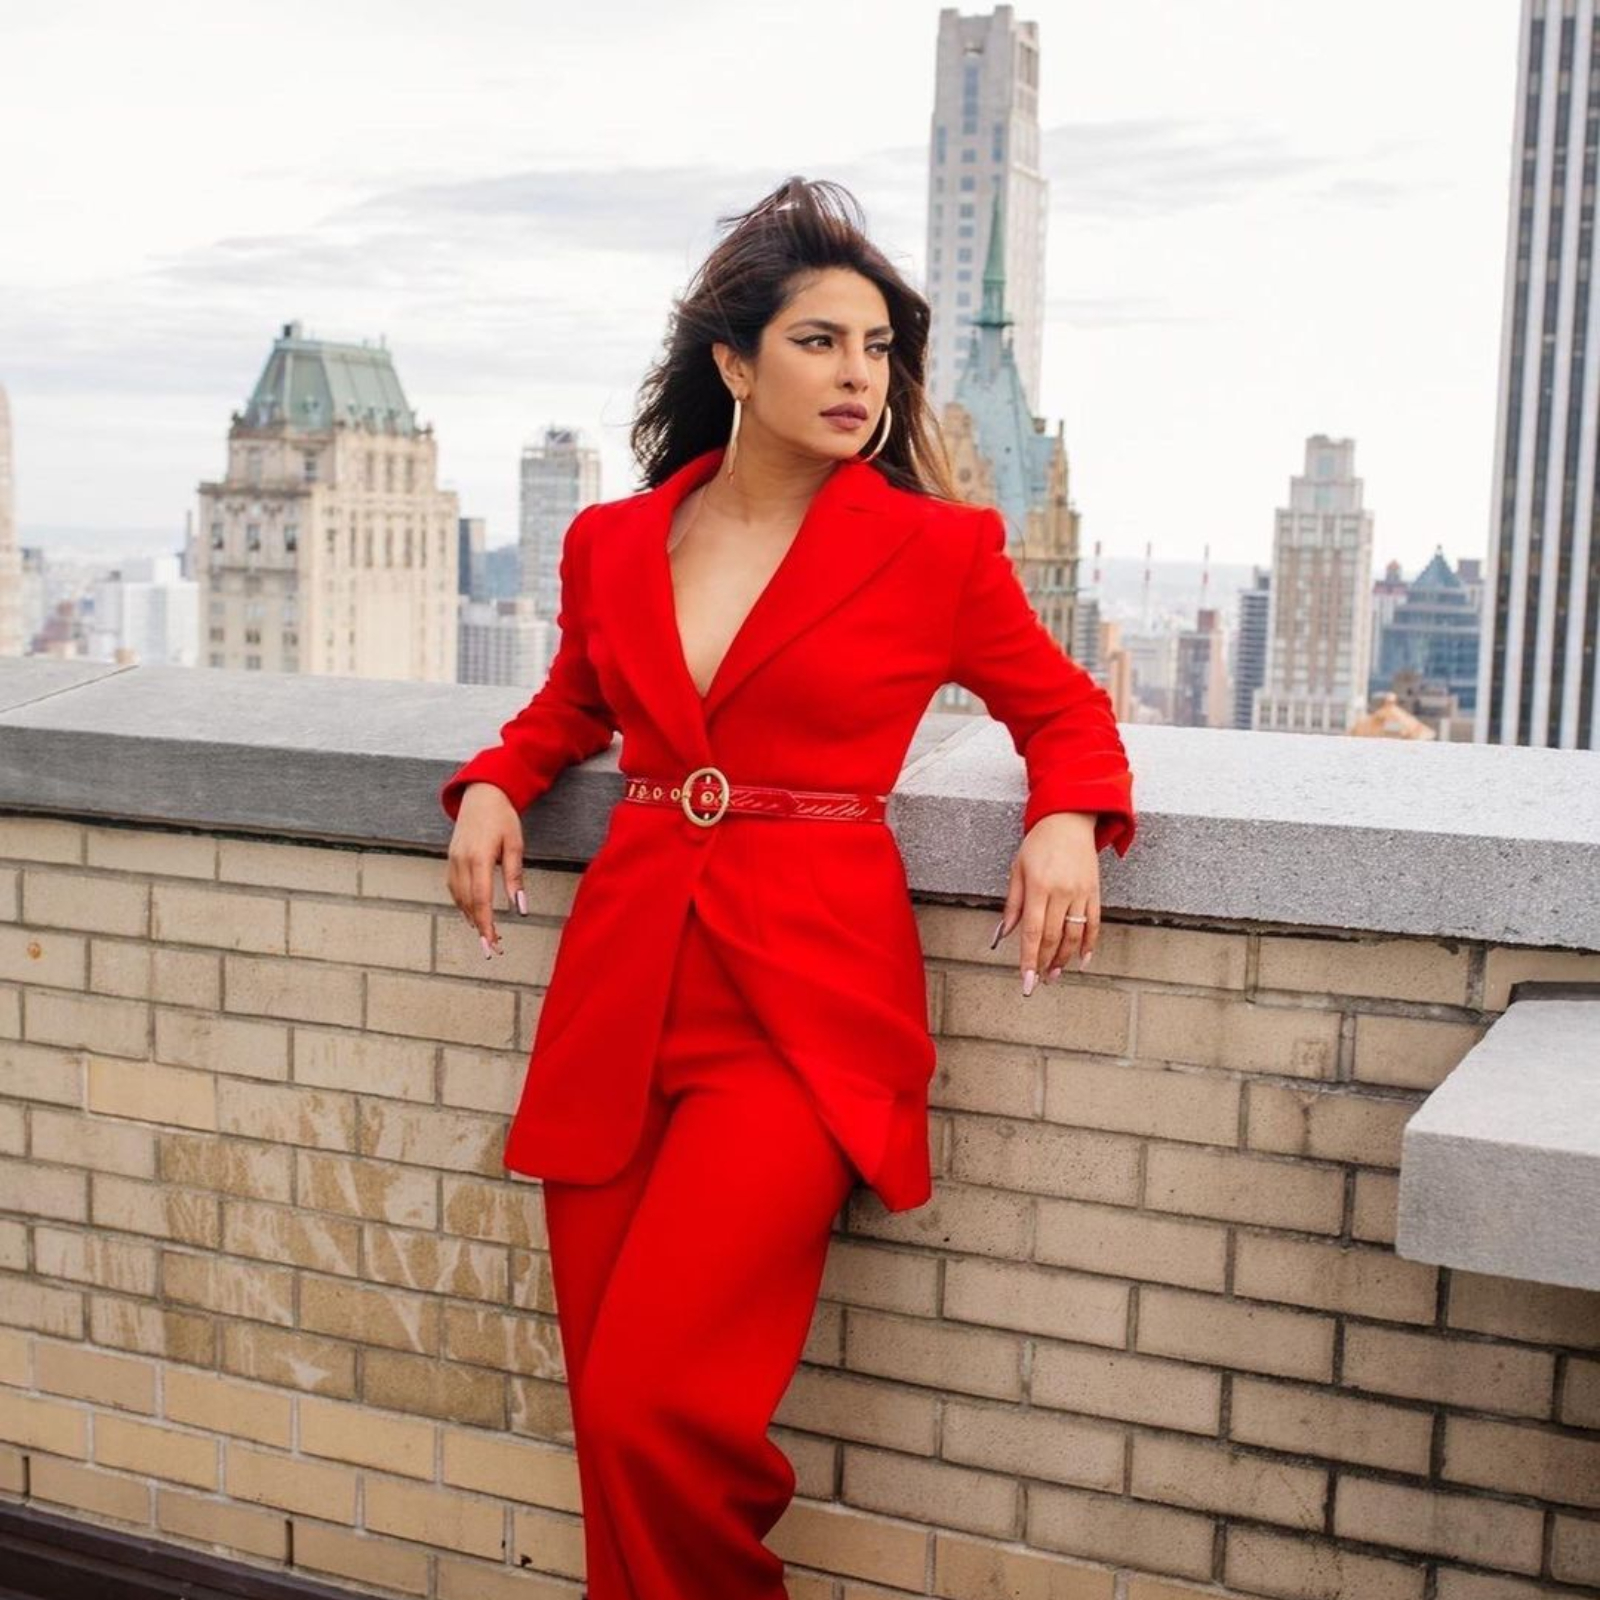 Priyanka Chopra looks uber chic in the smart red pantsuit